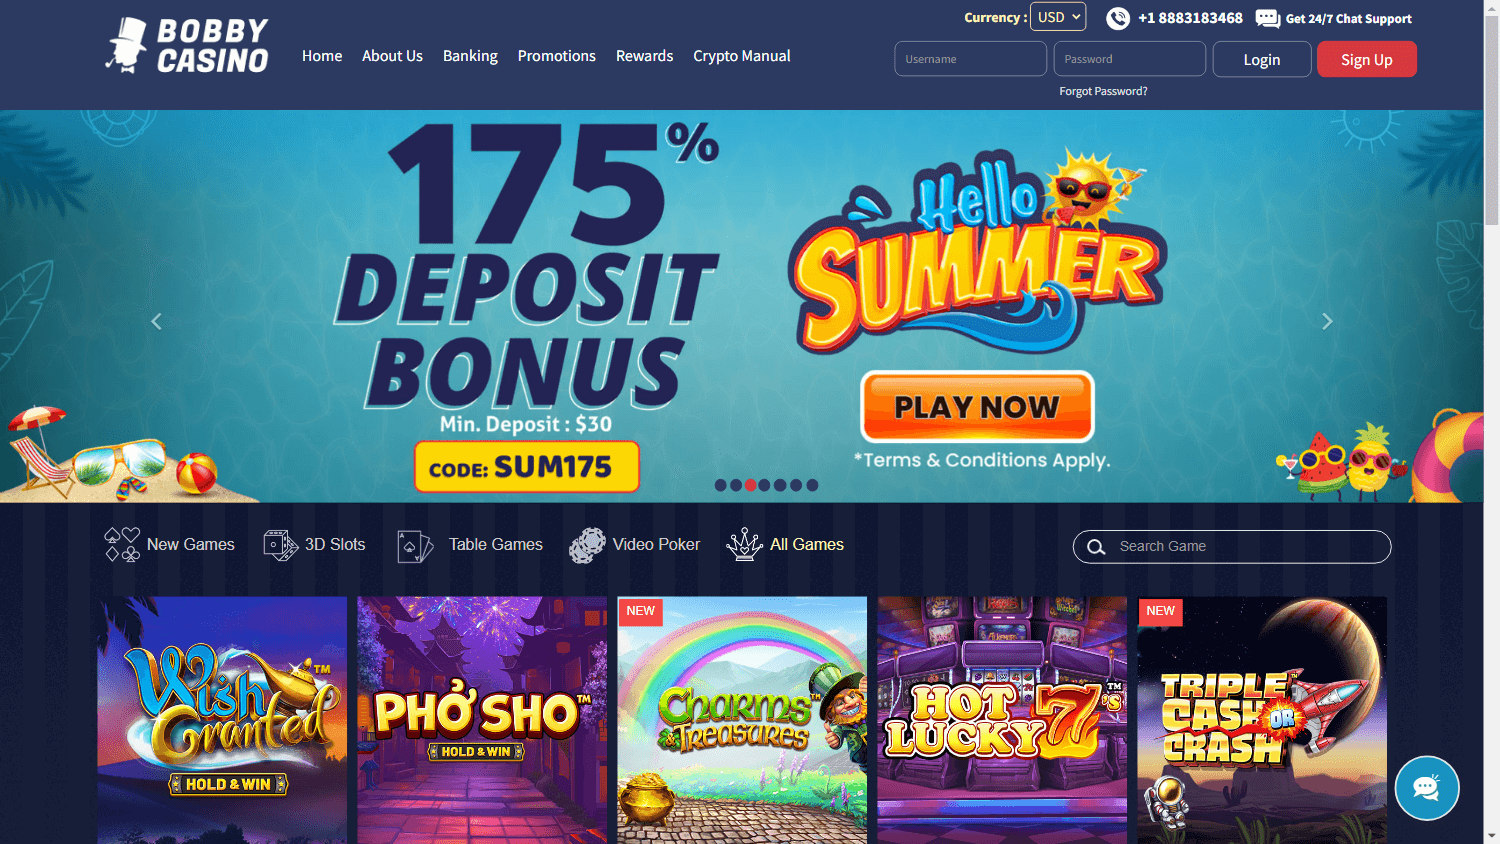 bobby_casino_homepage_desktop